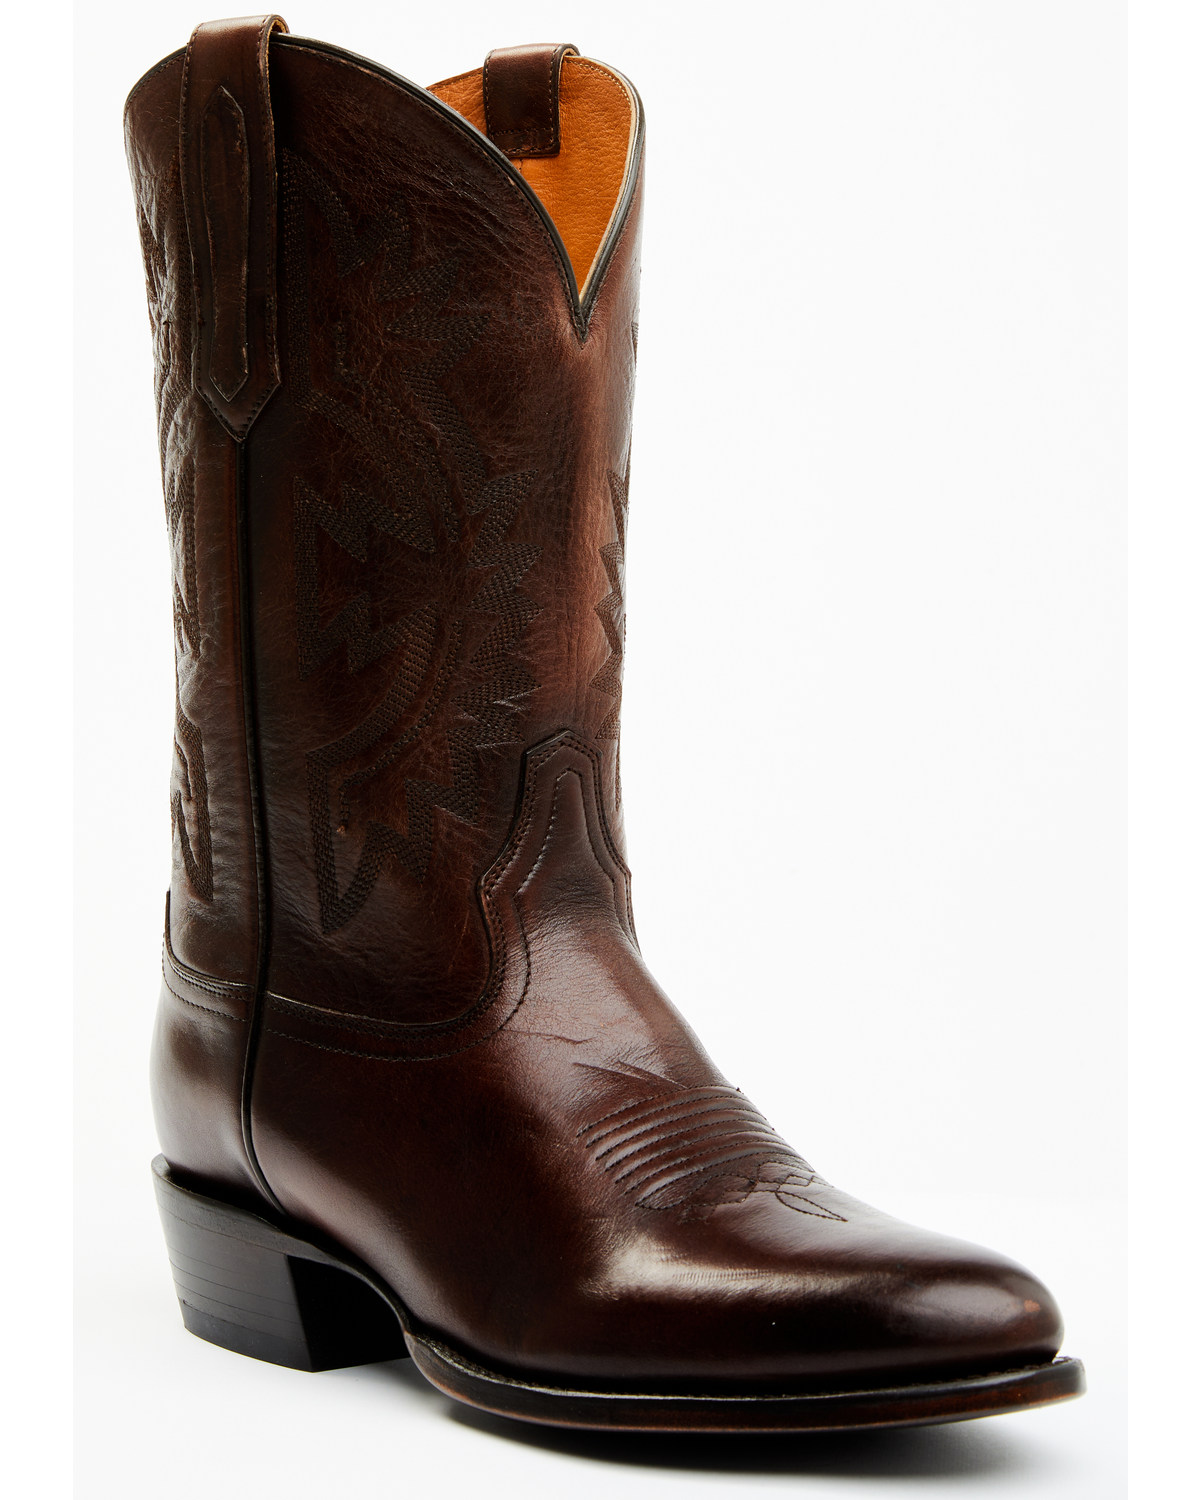 Cody James Men's Western Boots - Medium Toe